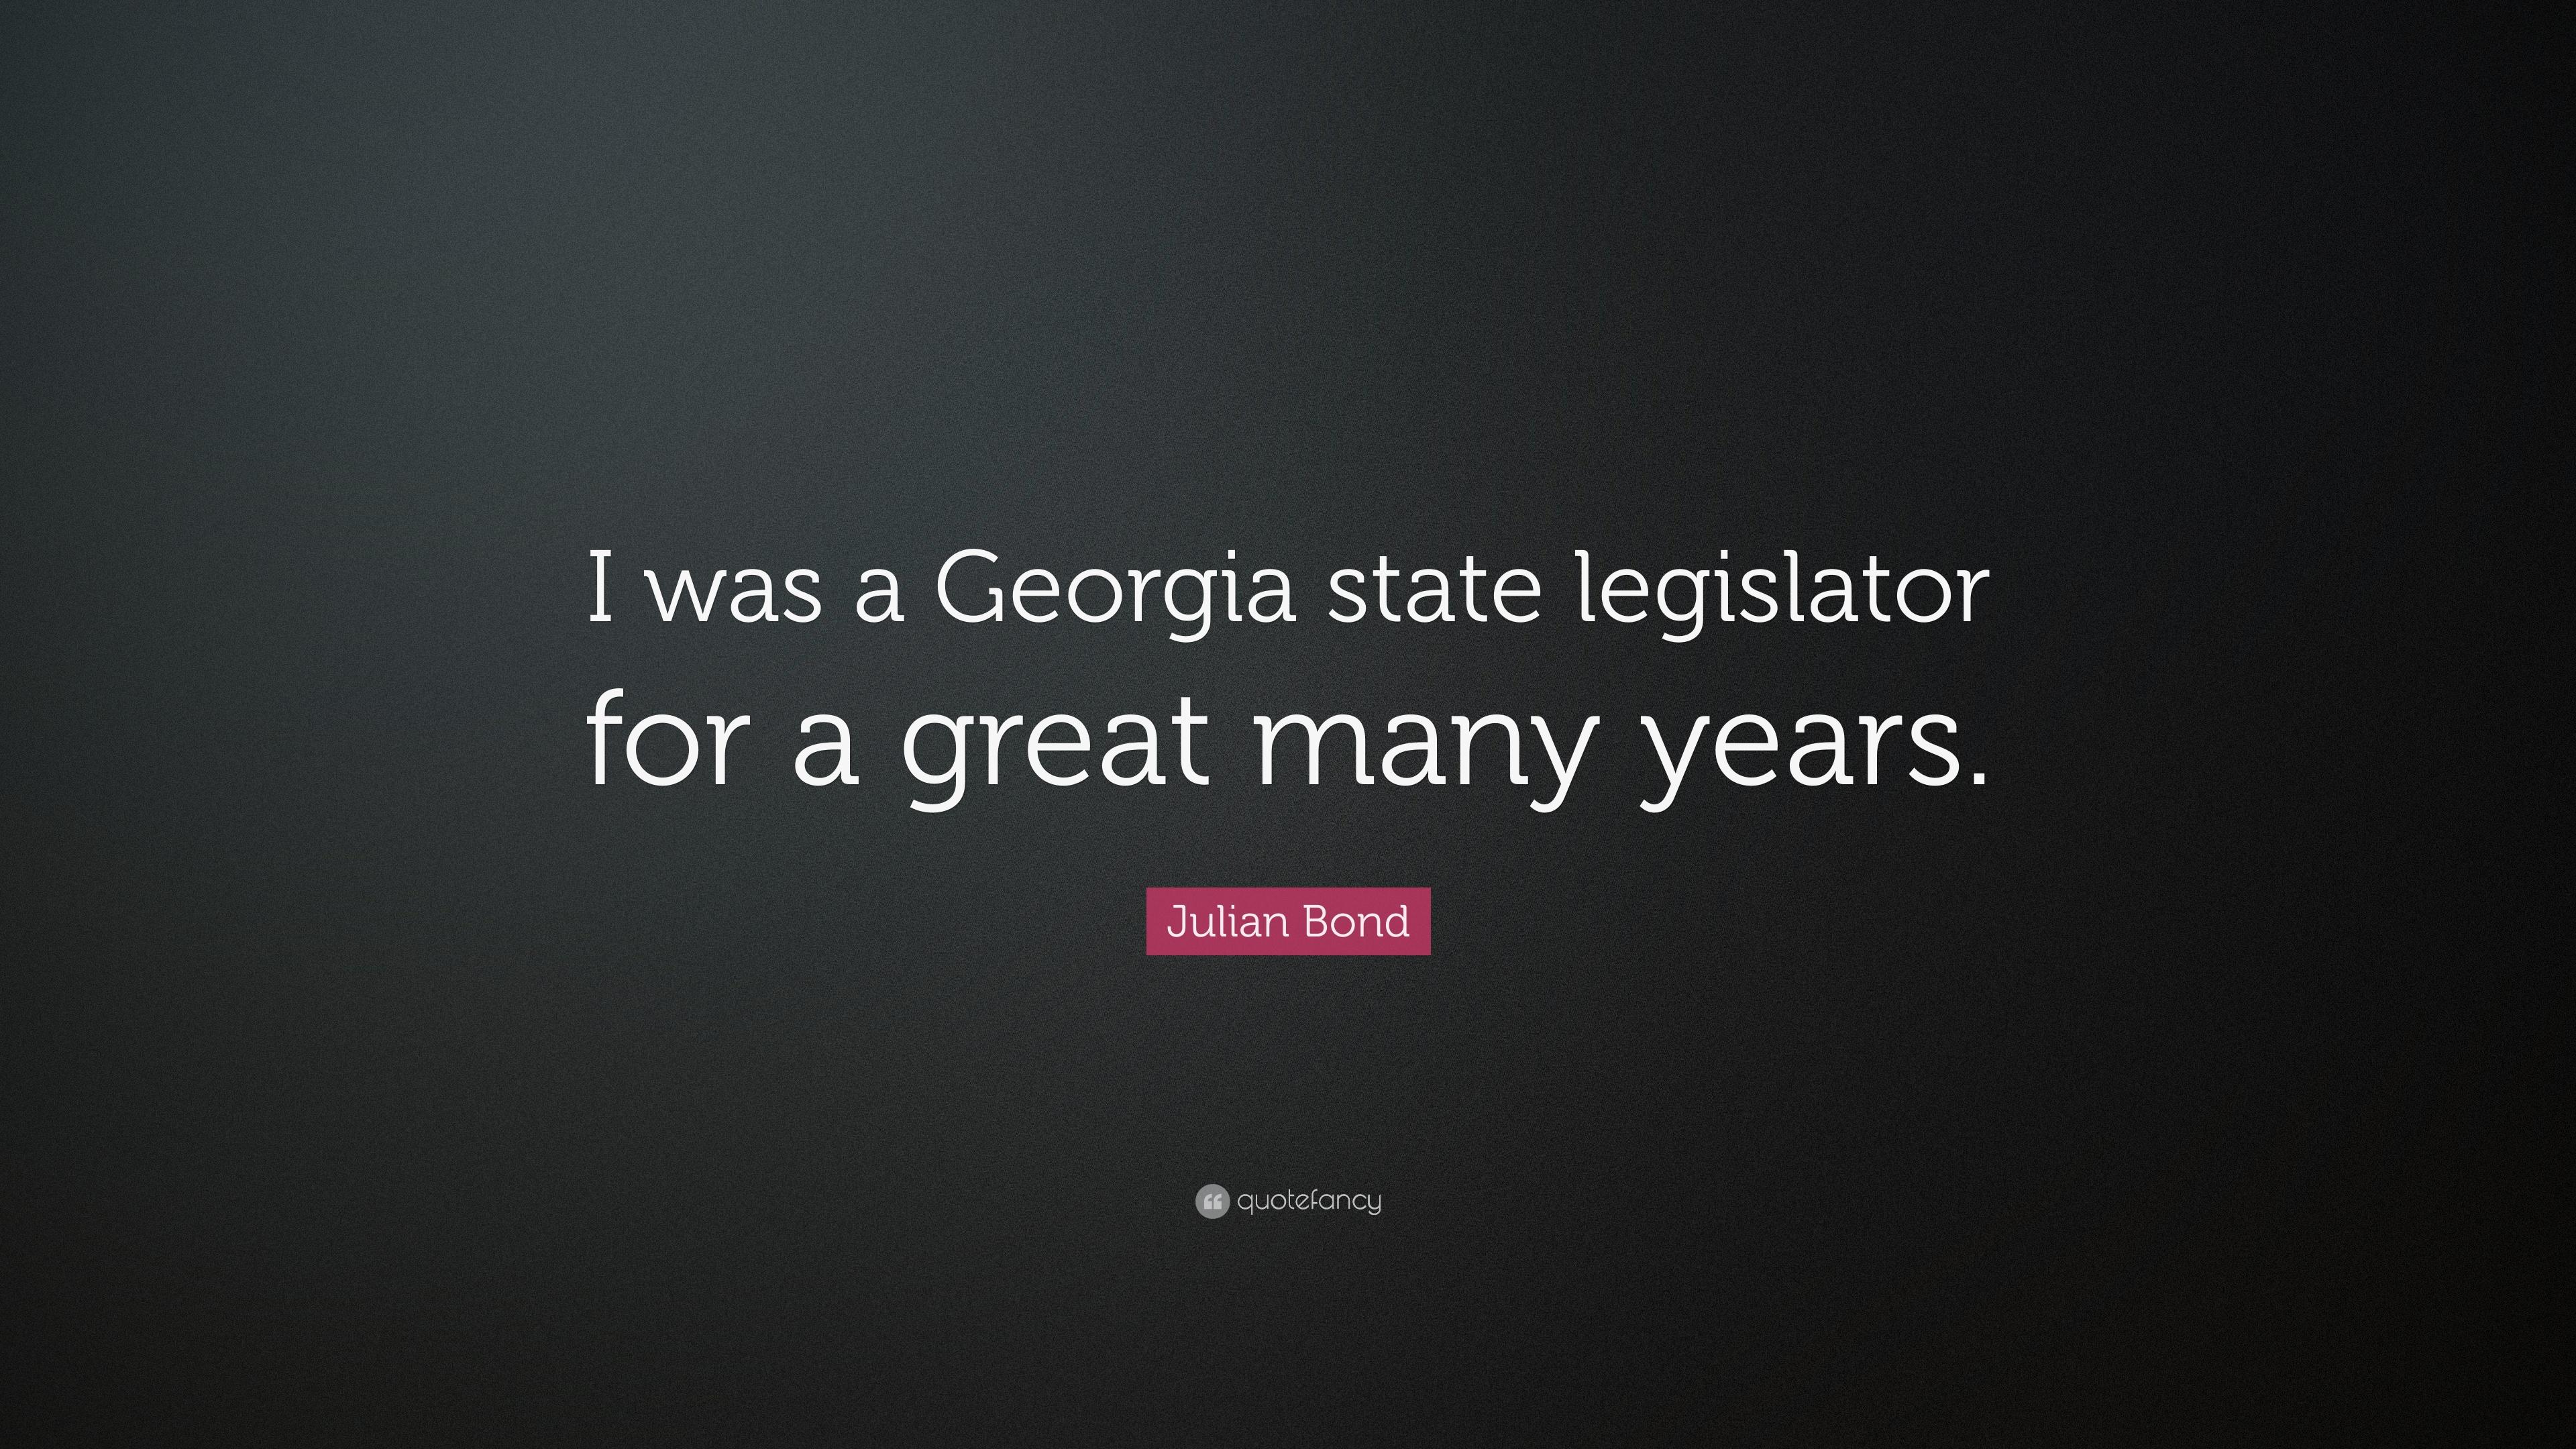 Julian Bond Quote: “I was a Georgia state legislator for a great